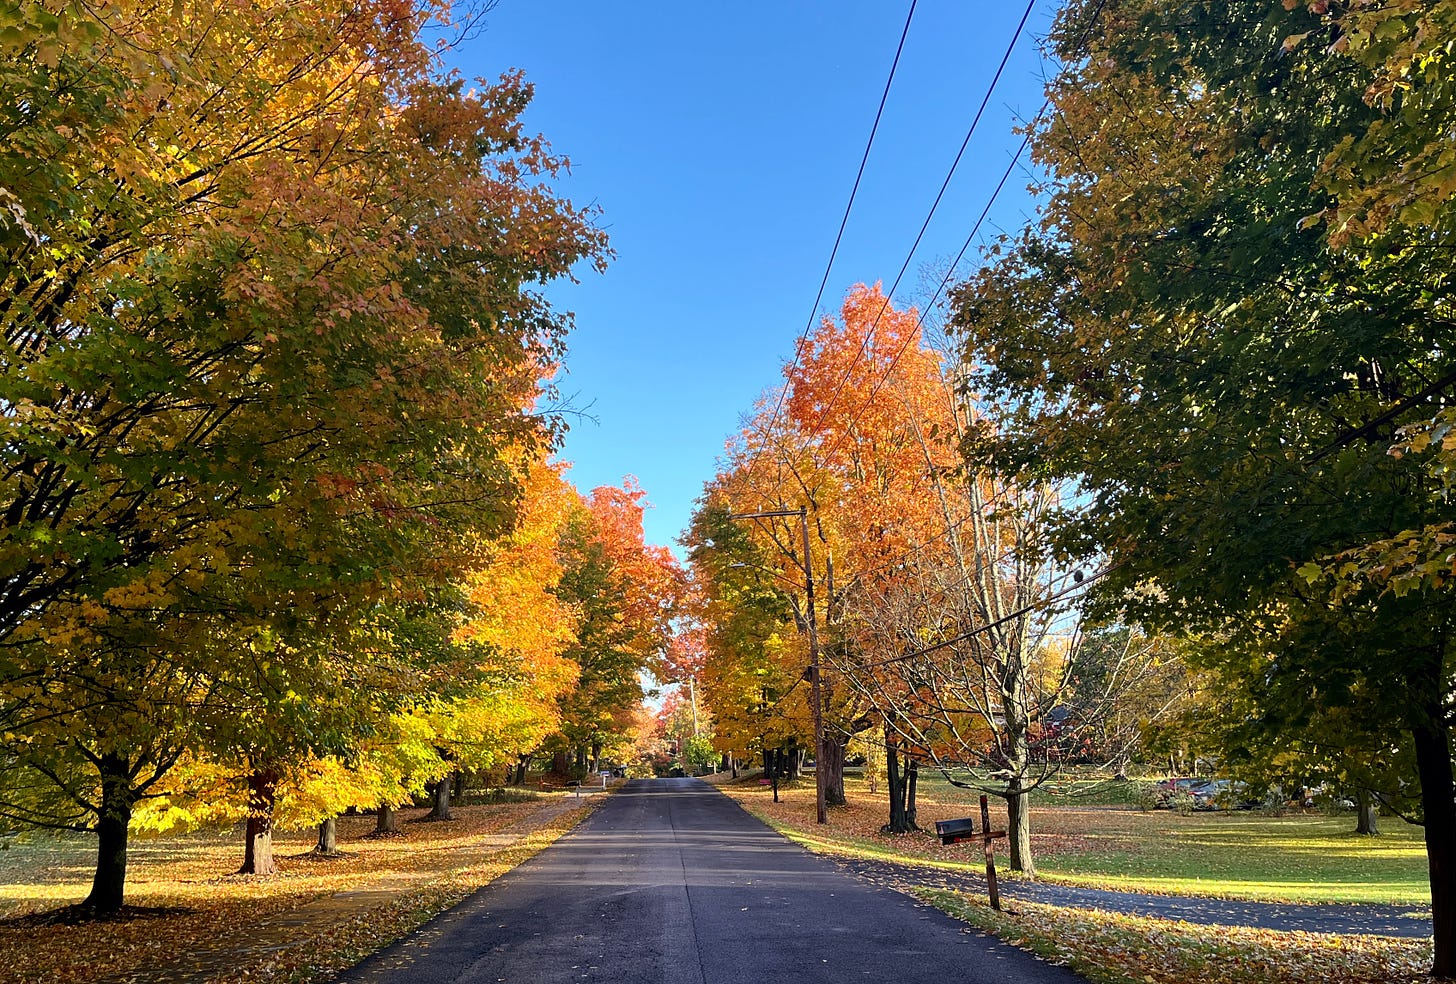 Fall foliage on trees lining a street